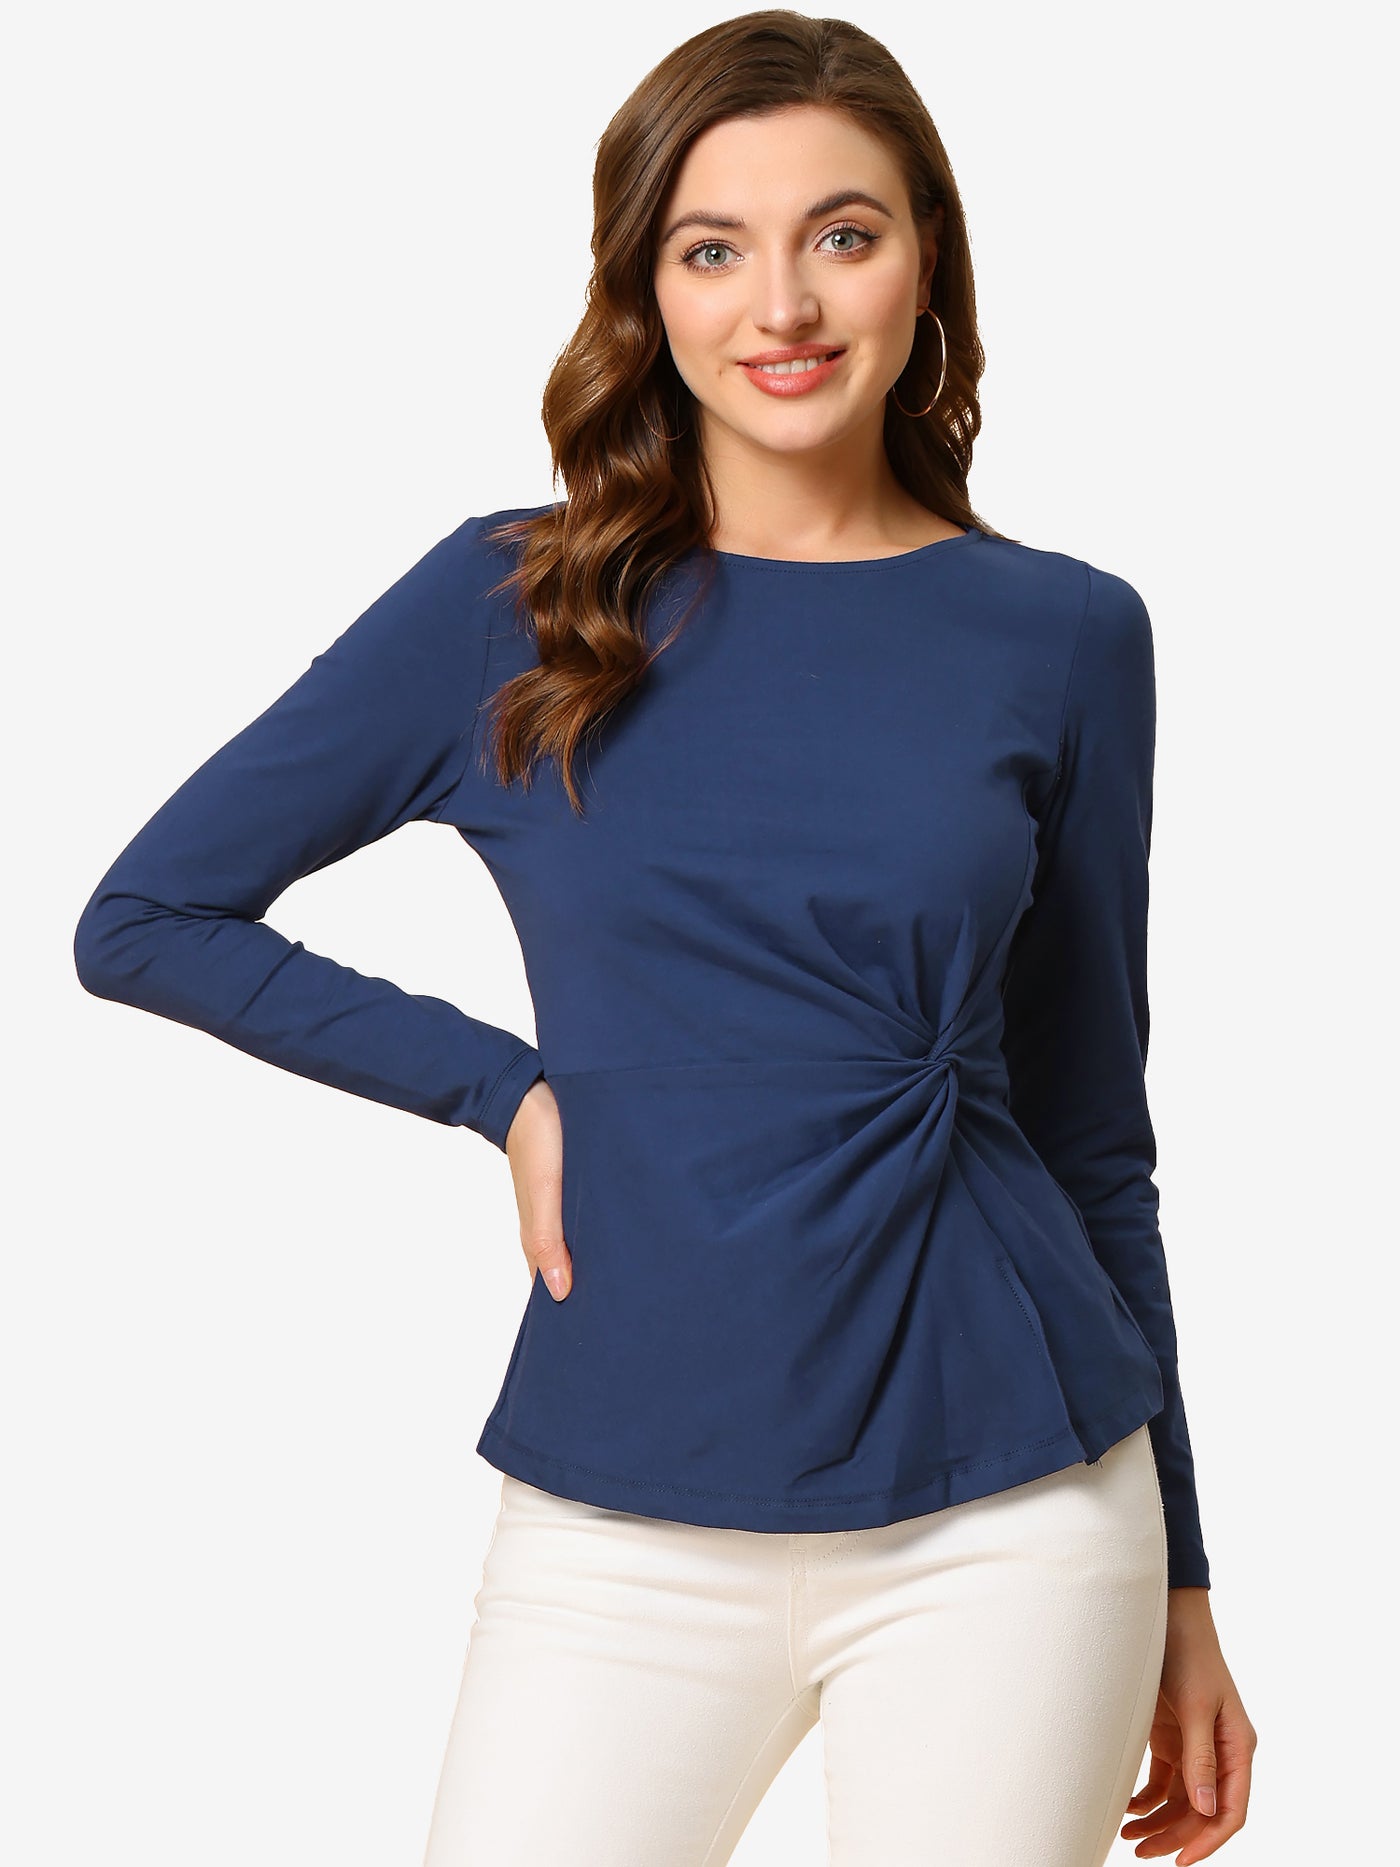 Allegra K Round Neck Front Twist Tops Long Sleeve Blouse T Shirt